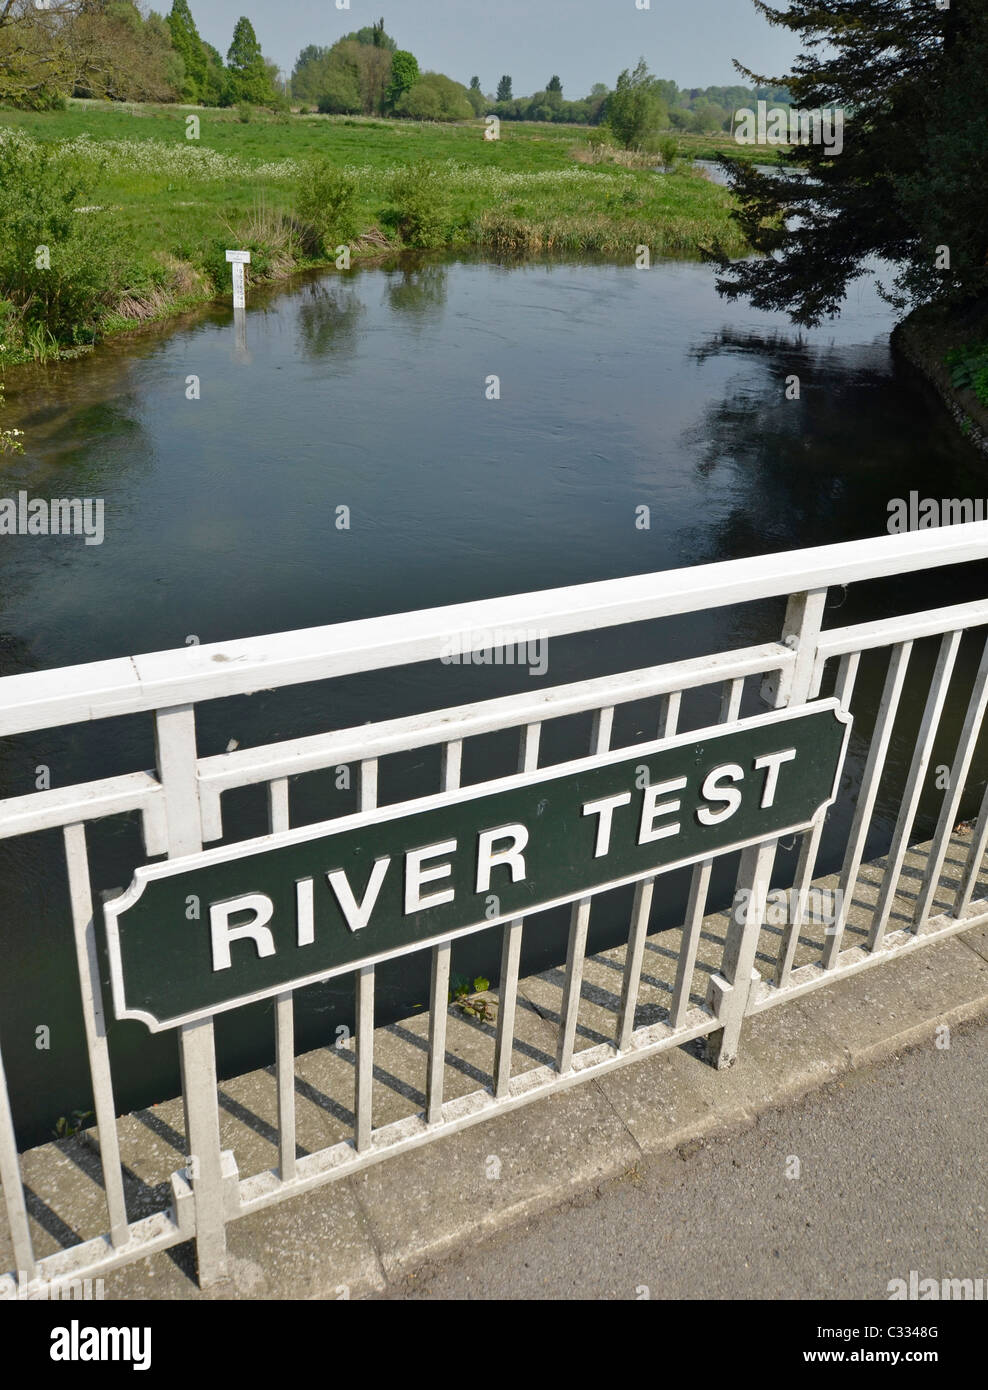 Fluss-Test anmelden Brücke bei stockbridge Stockfoto